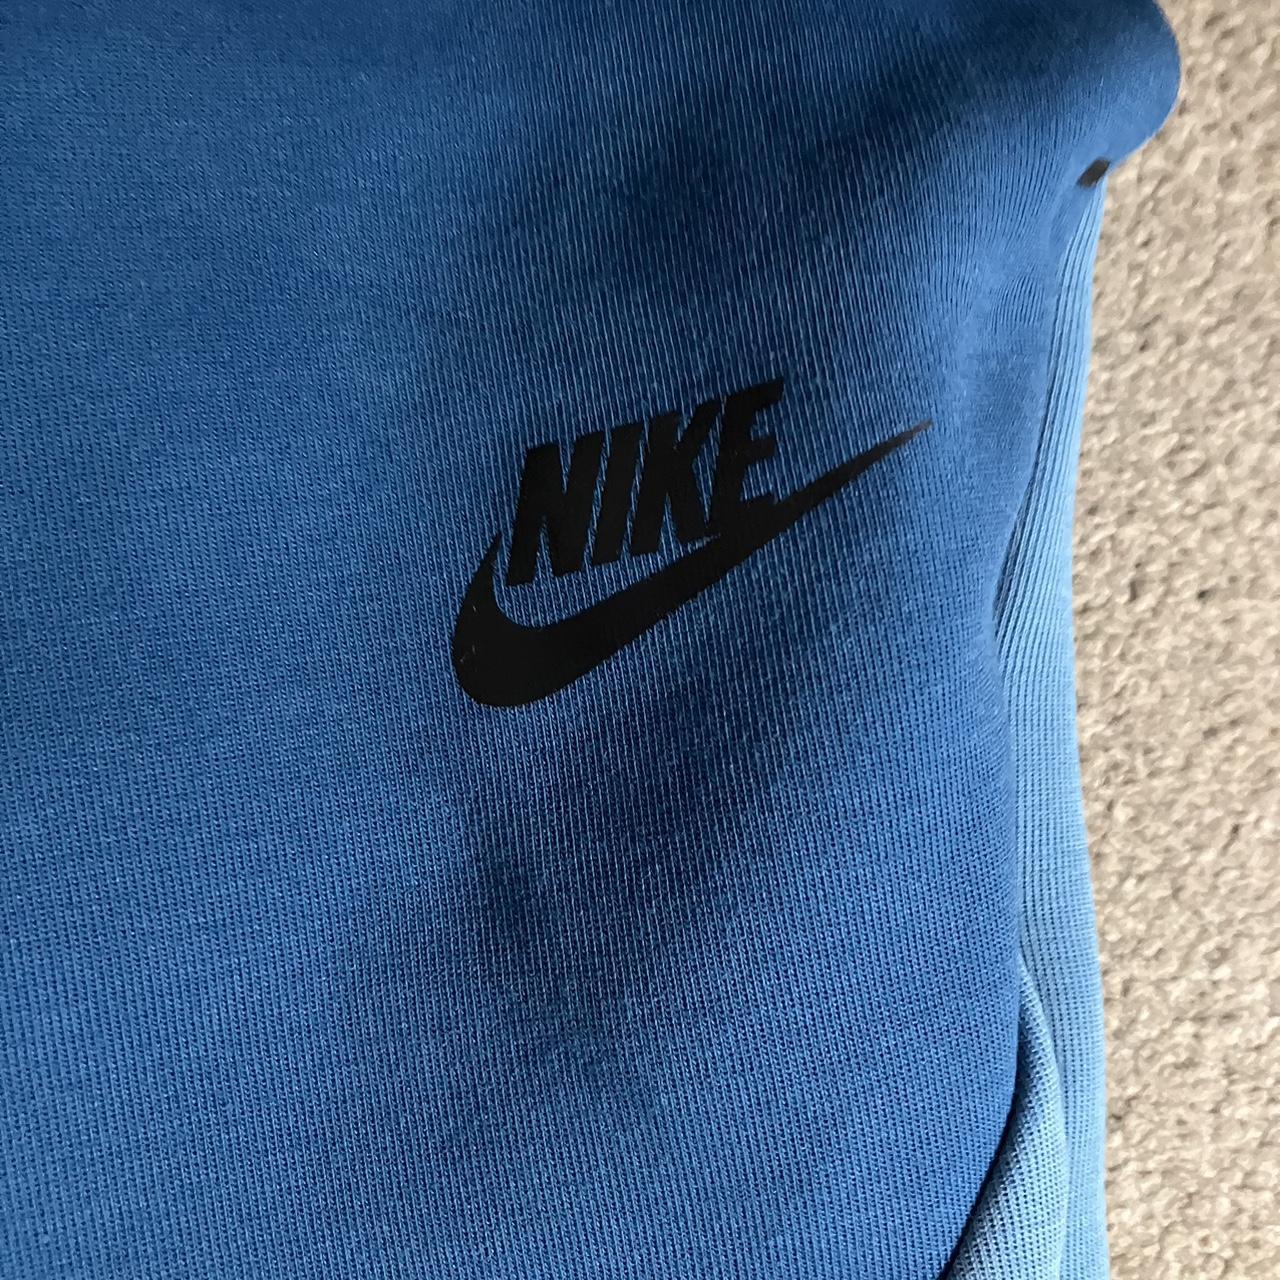 Nike tech fleece joggers Dutch blue size xs Super... - Depop